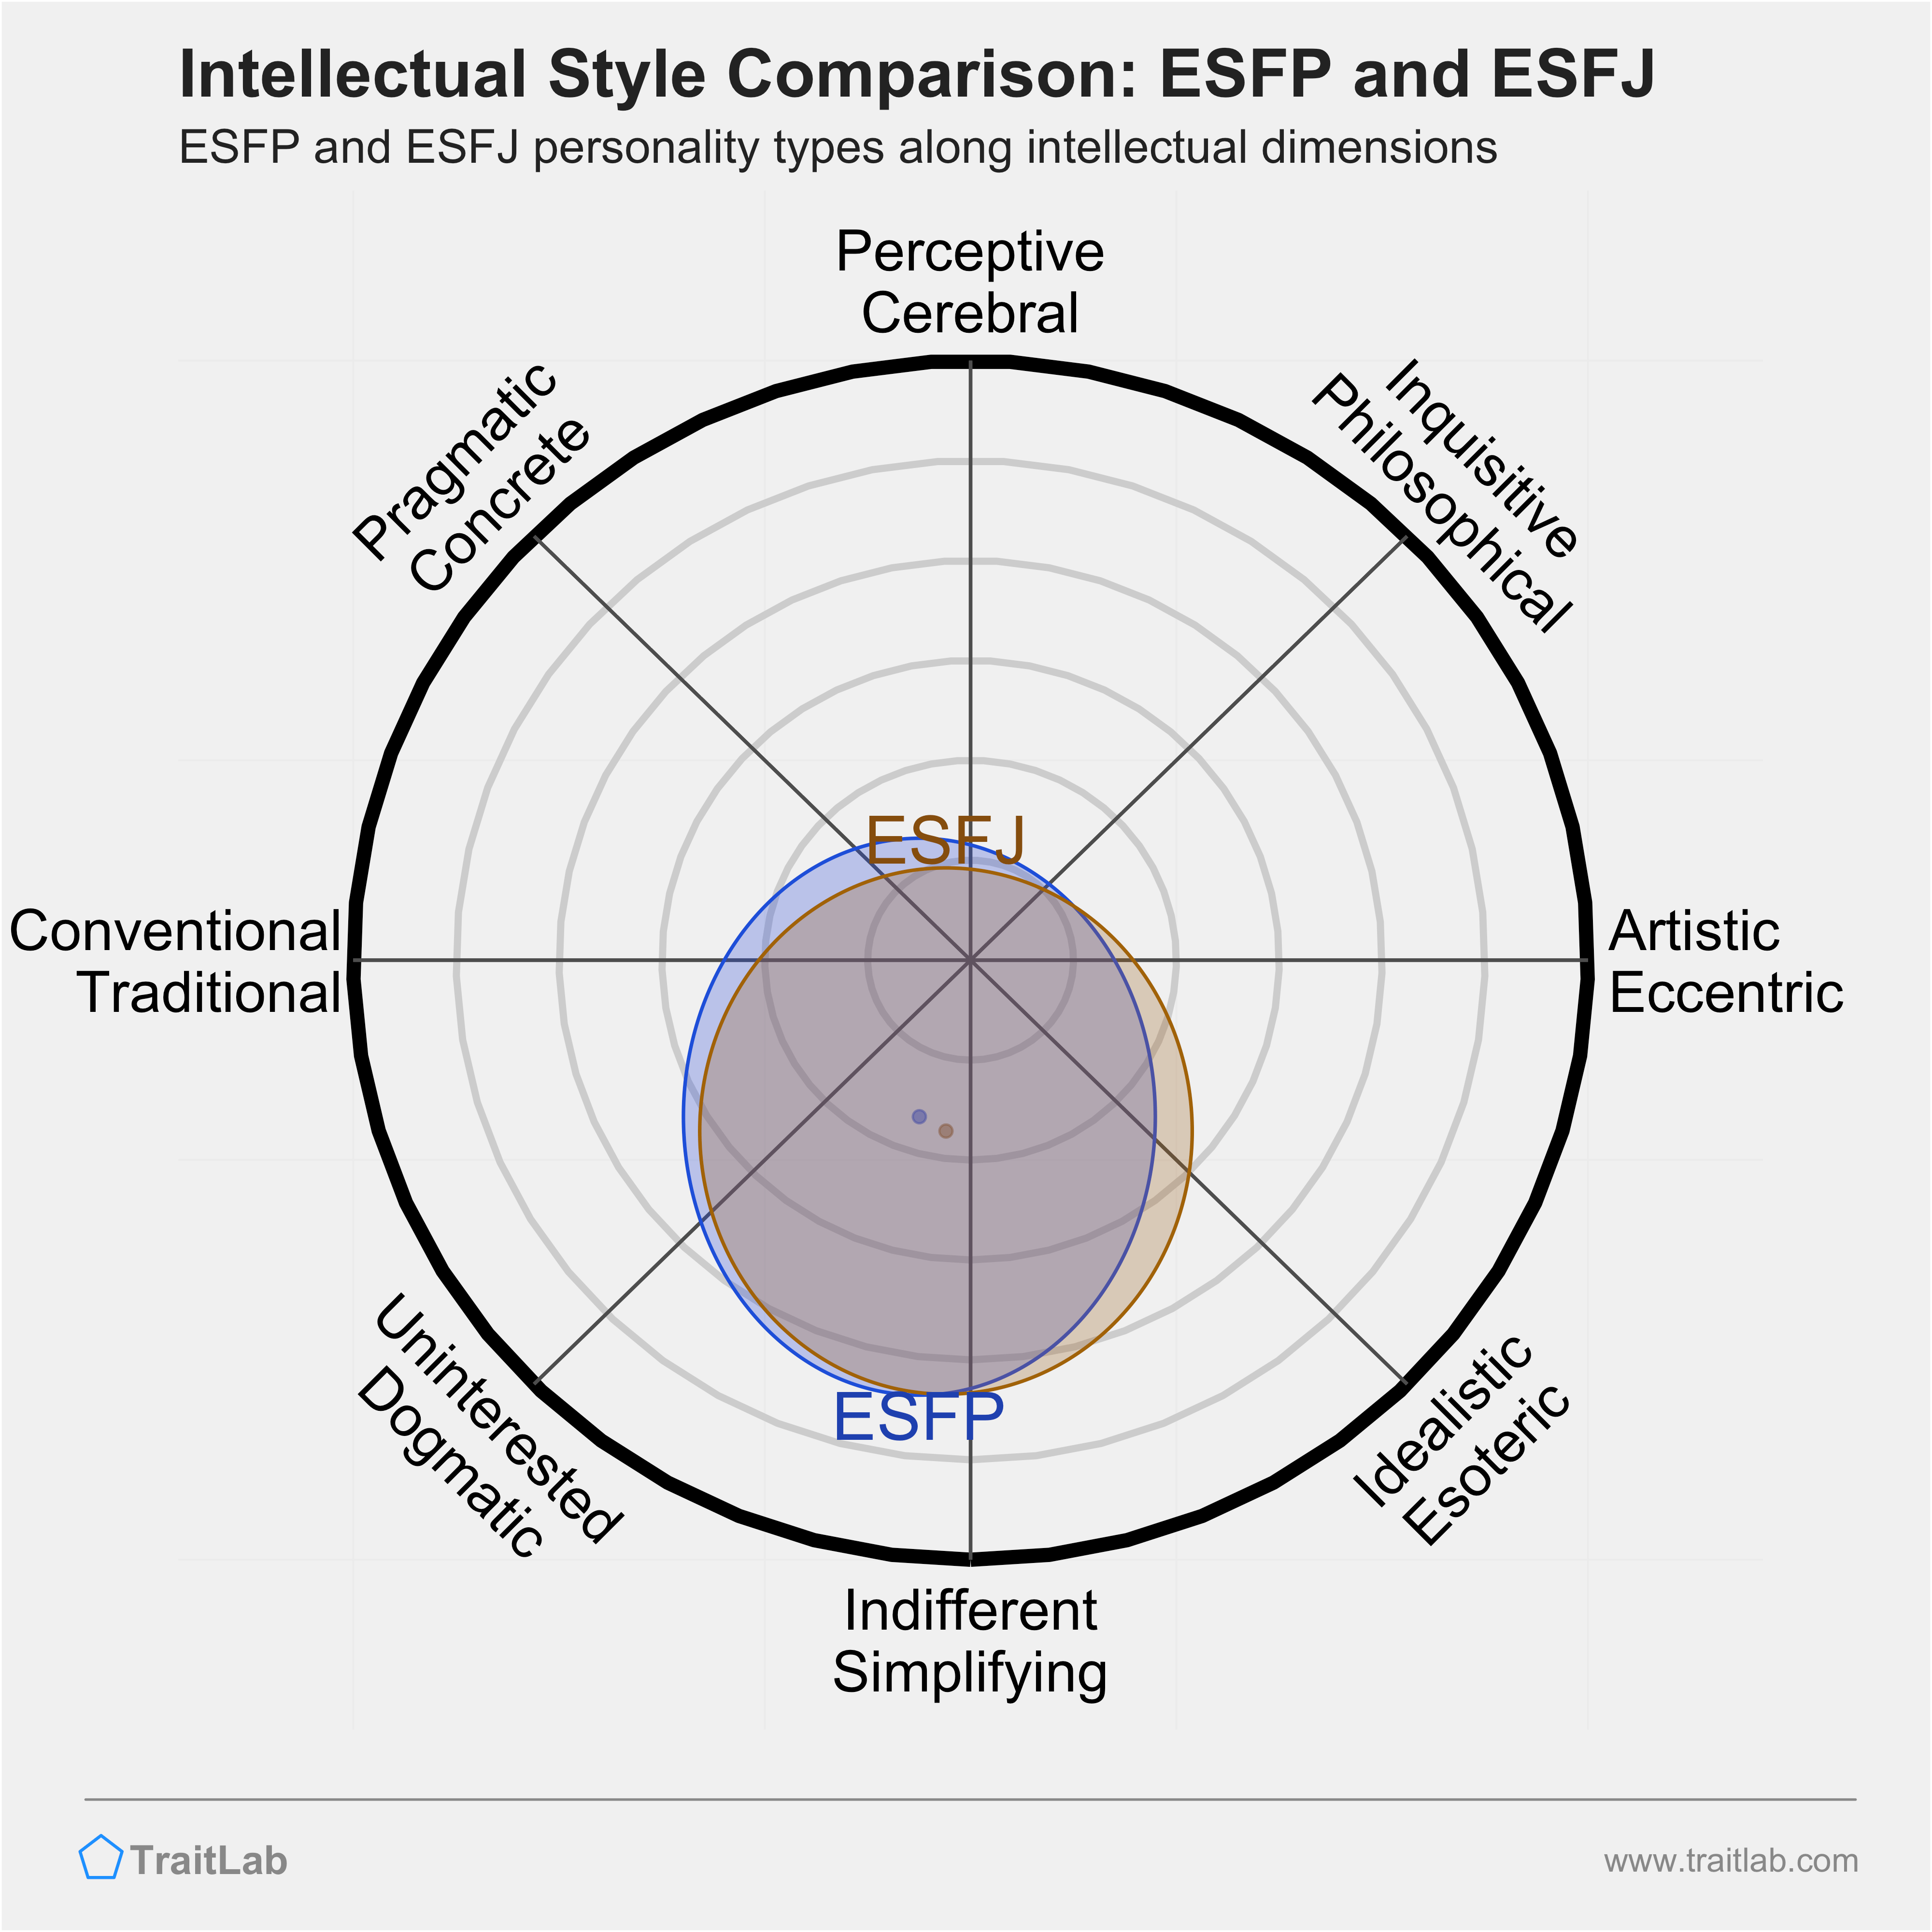 ESFP and ESFJ comparison across intellectual dimensions